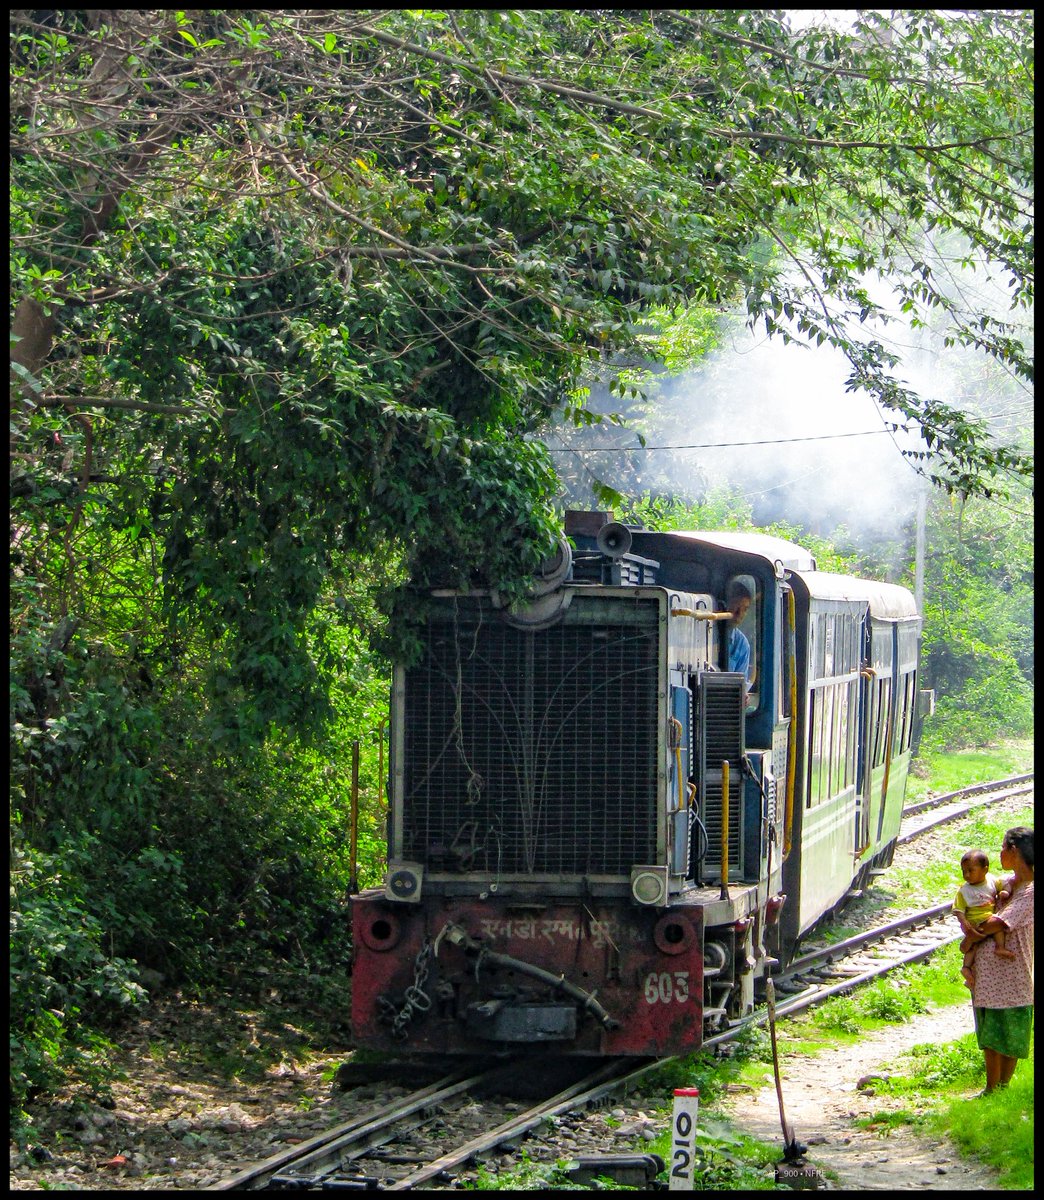 #DarjeelingHimalayanRailway ..!⭐ 

Inframe - SGUJ #NDM6 #603 christened as #TRIDHARA leads the 52541 #NewJalpaiguri - #Darjeeling #TOYTRAIN !

#NFRailEnthusiasts
@reachdhr | @drm_kir | @RailNf | @RailMinIndia